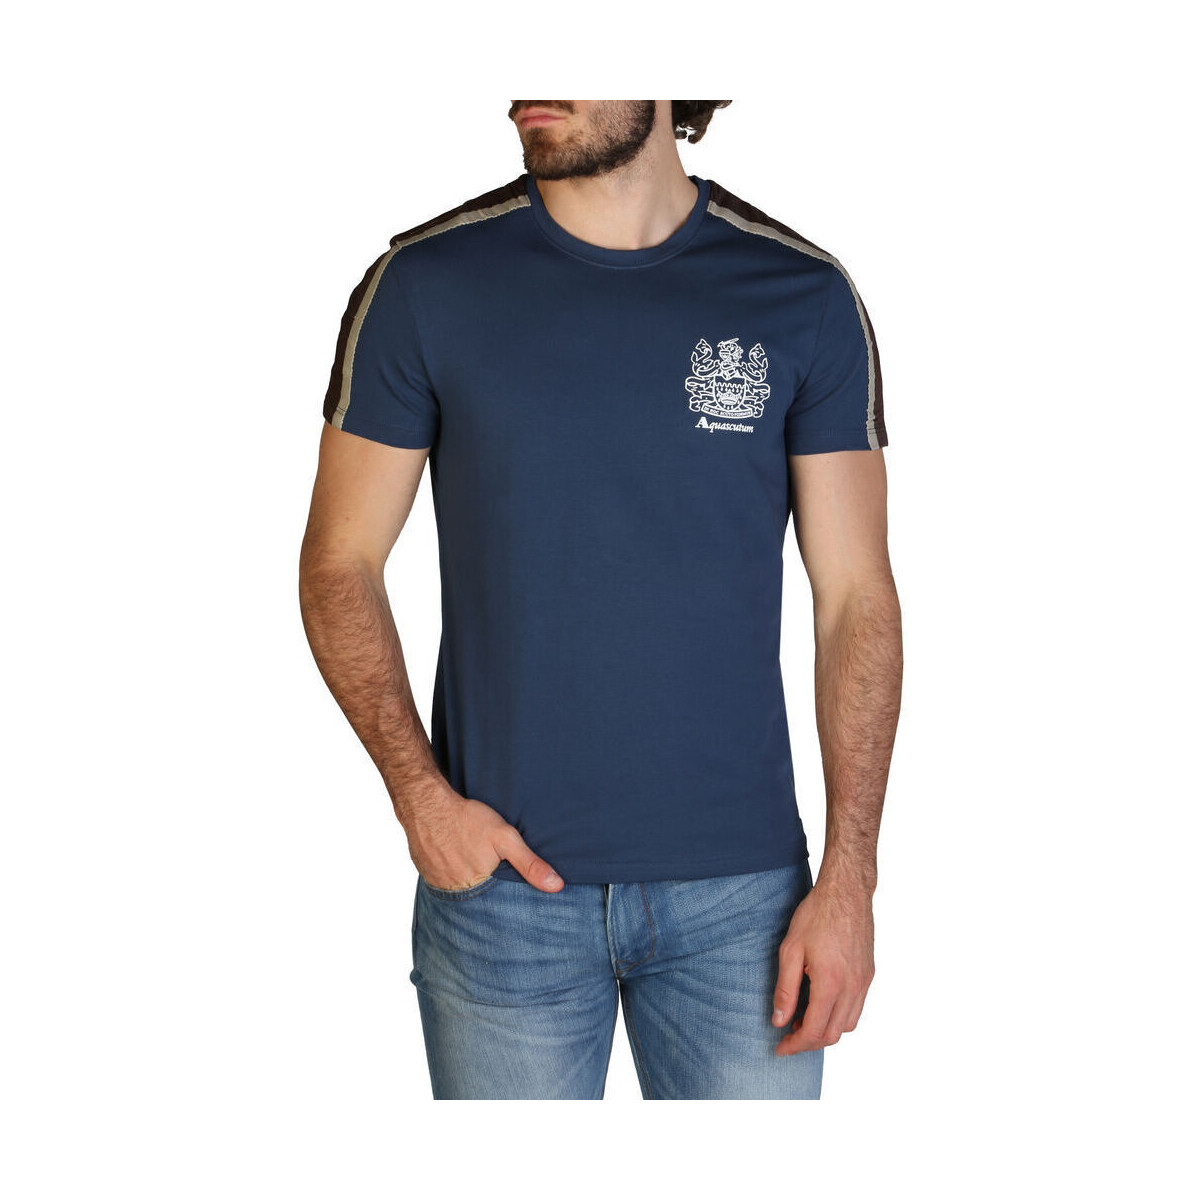 Textiel Heren T-shirts korte mouwen Aquascutum - qmt017m0 Blauw